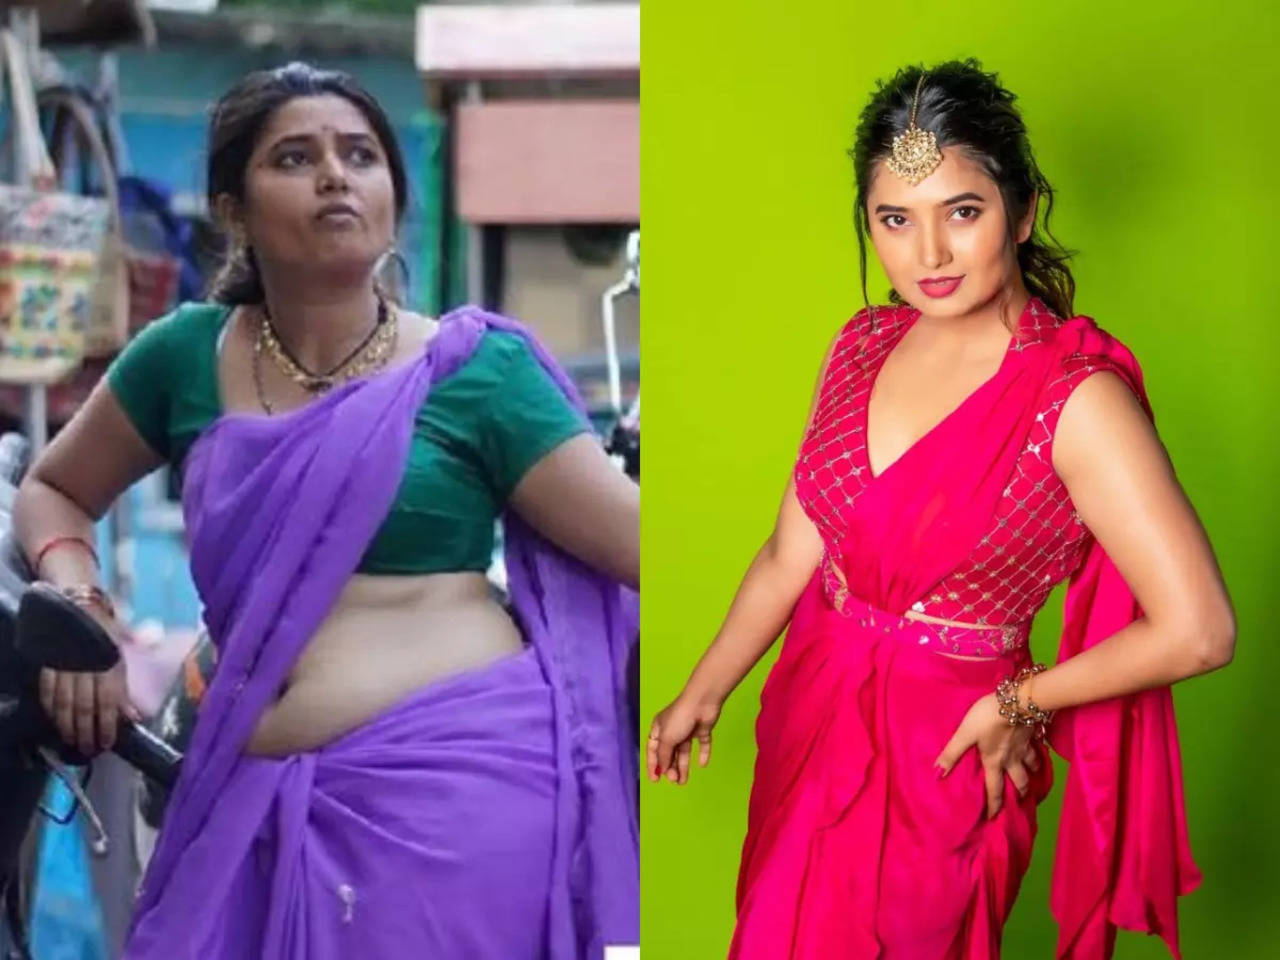 Prajakta Mali reveals she gained 7kgs to play sex worker in RaanBaazaar imagen